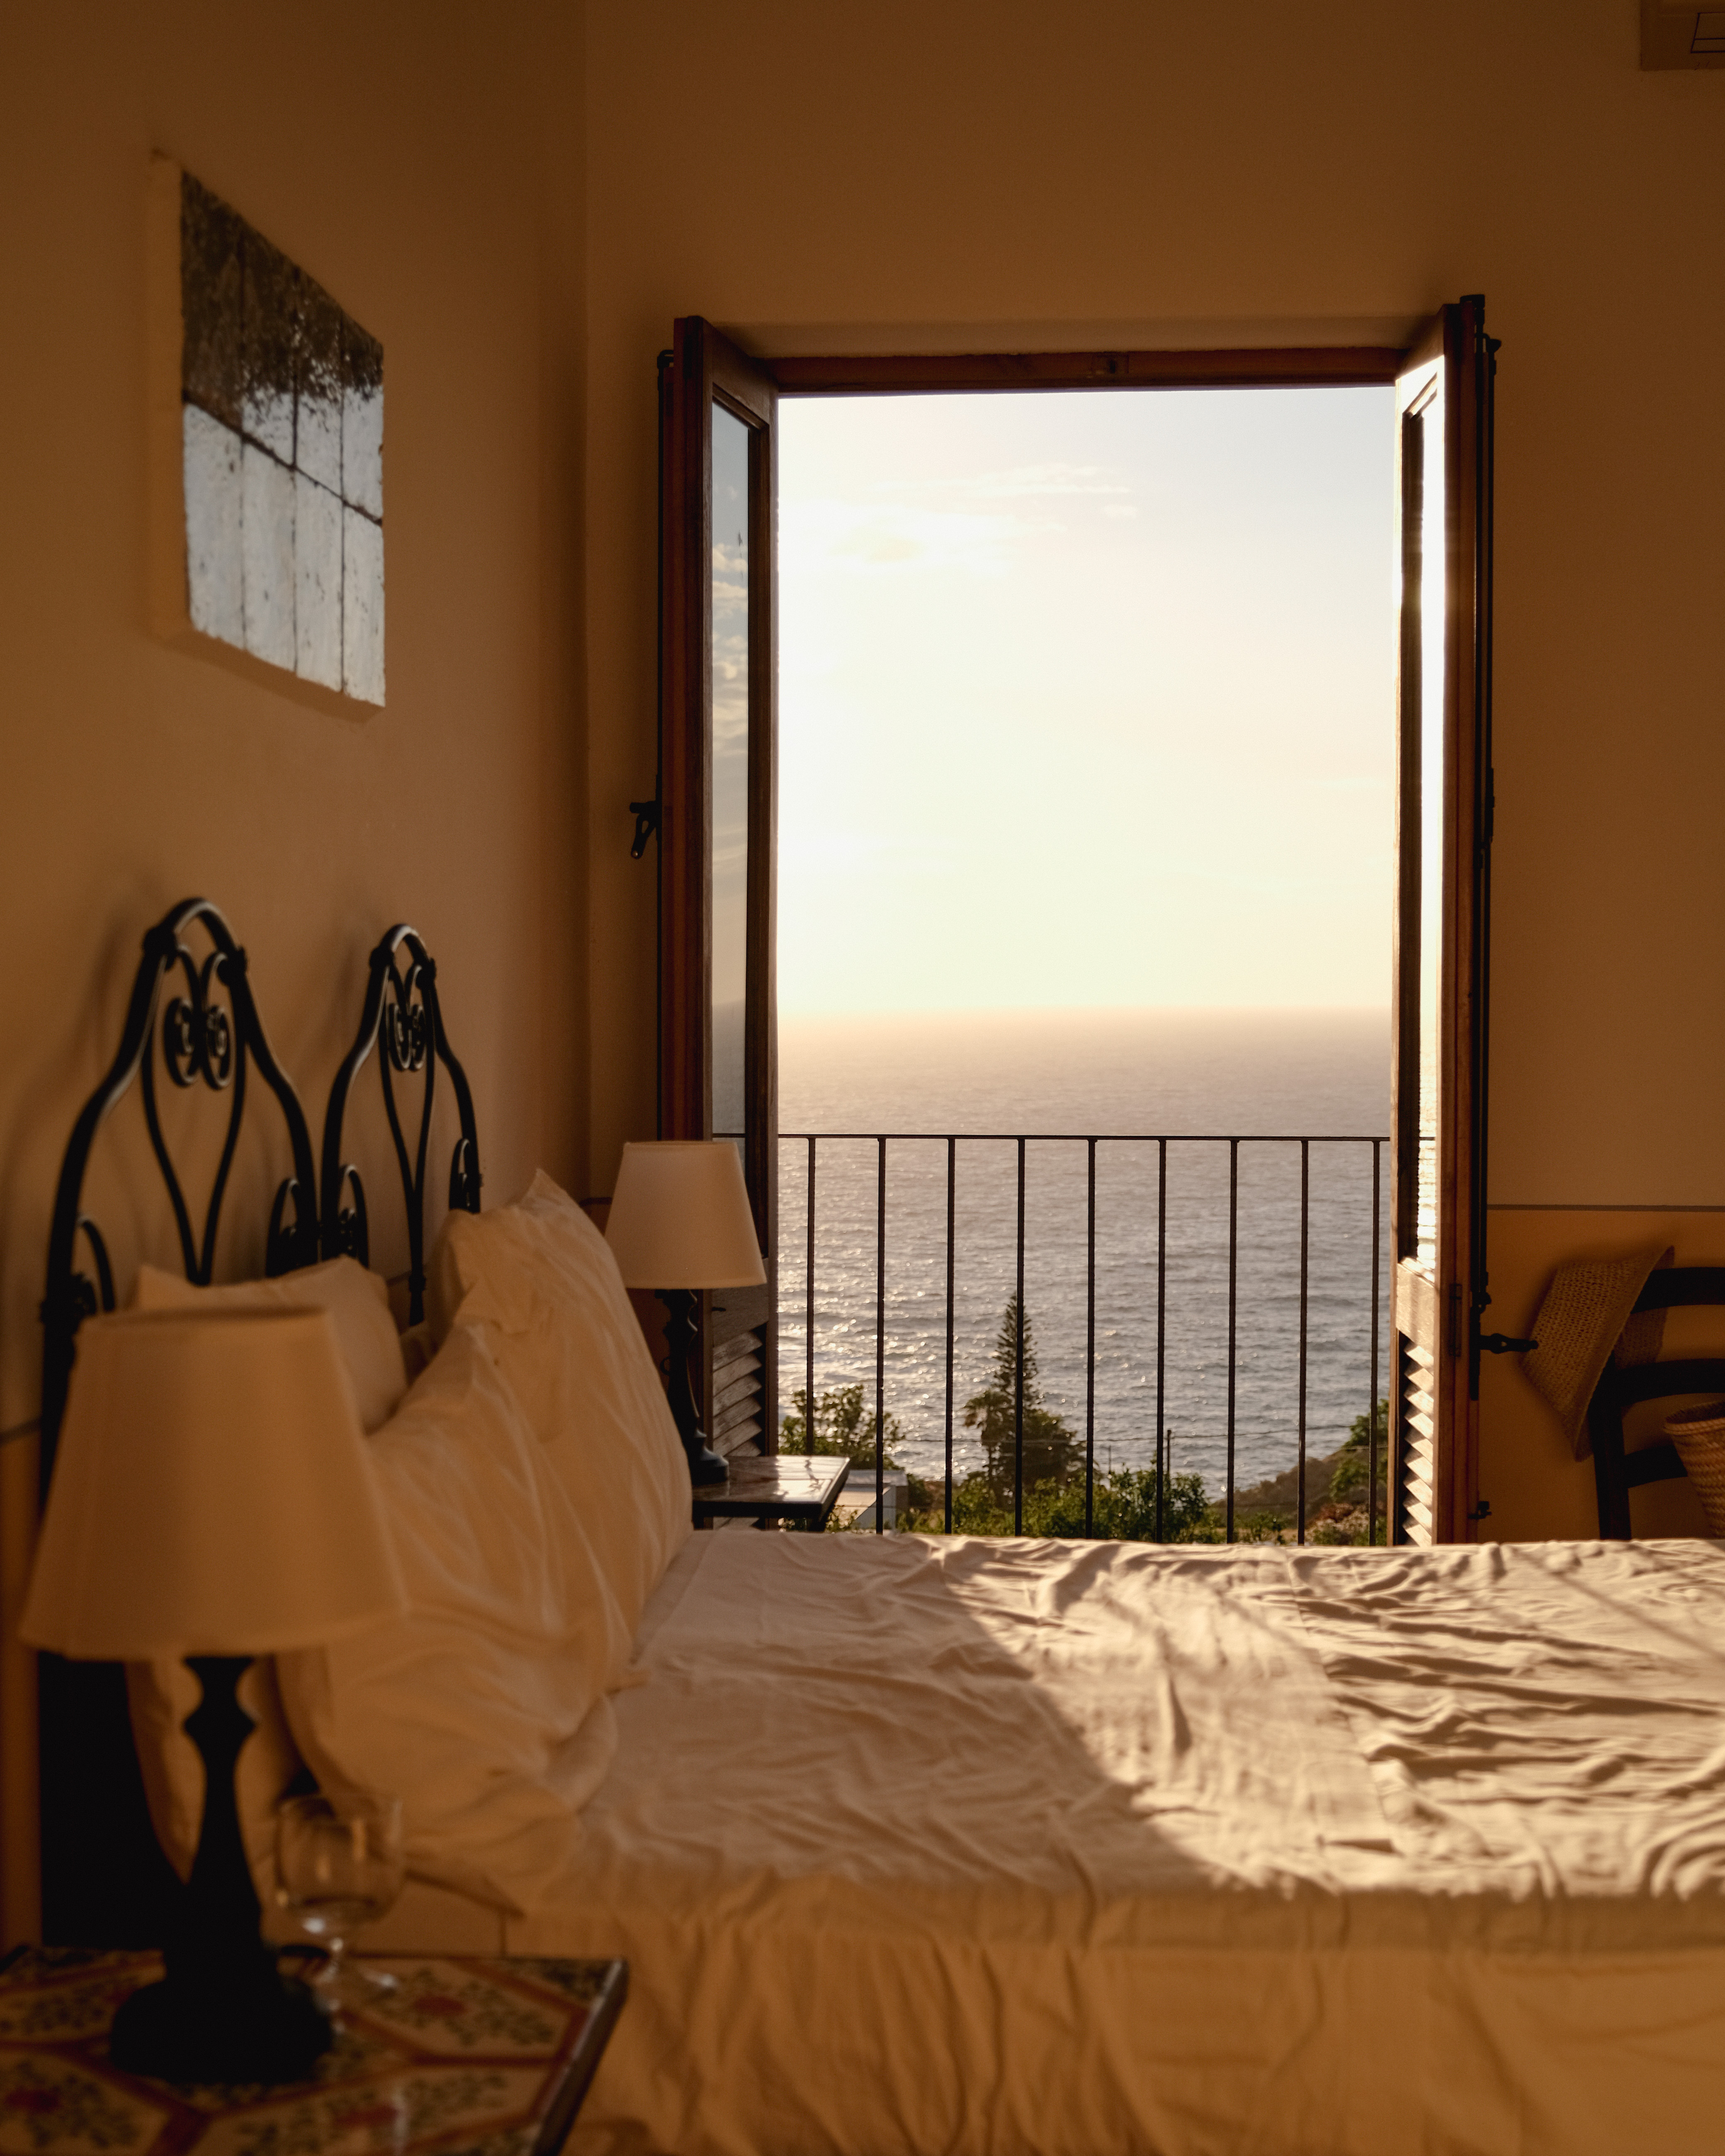 The view from the bed in Locanda Del Postino in Salina, Sicily //Photo Credit Roberta Mazzone